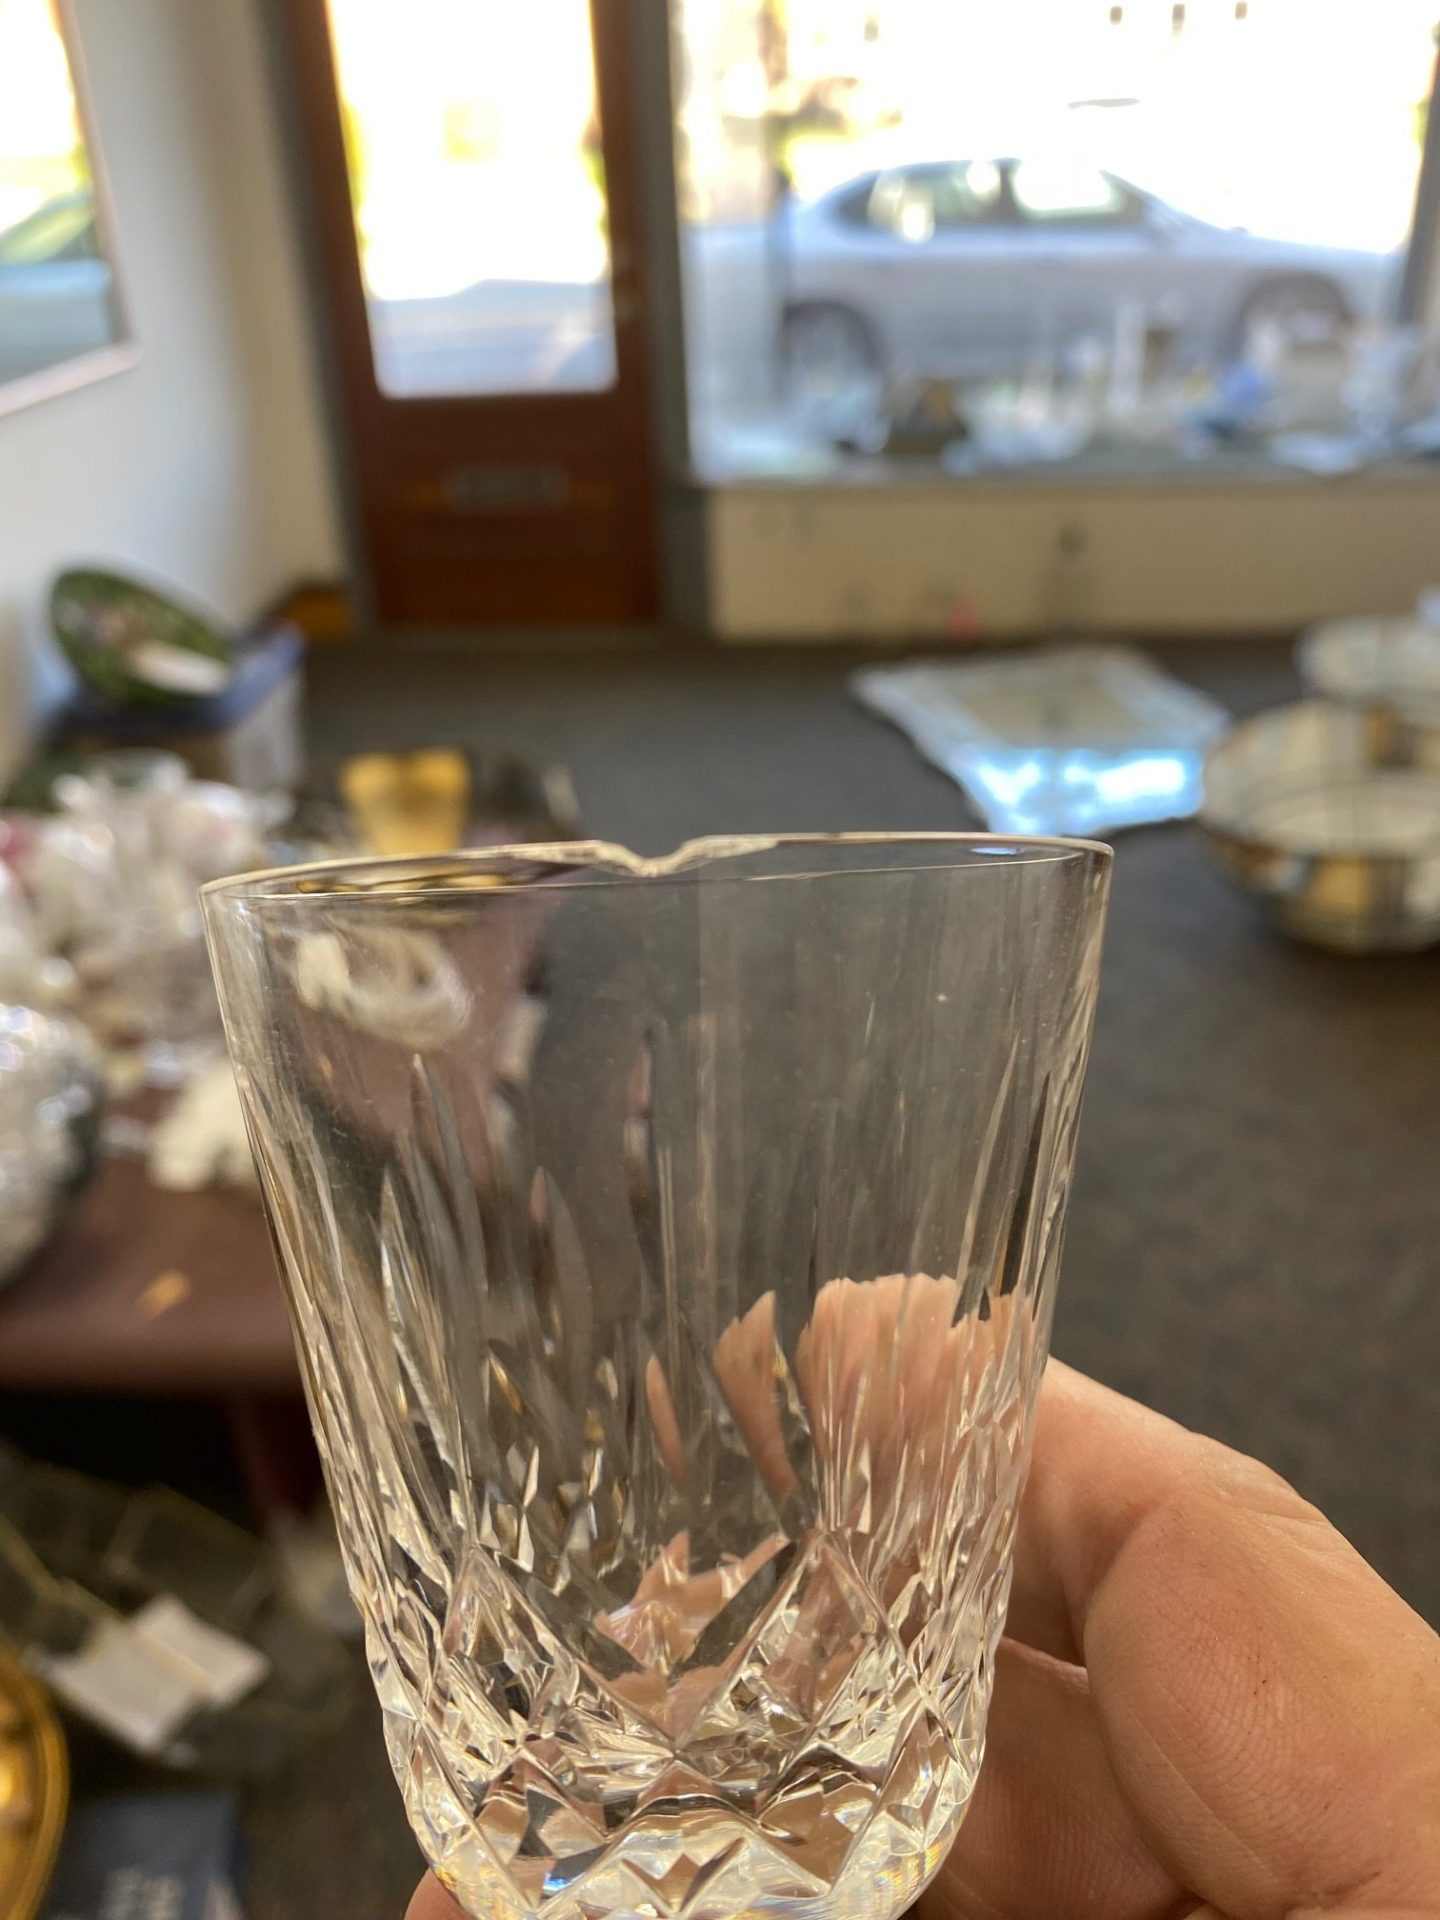 CHIPPED CRYSTAL WINE GLASS REPAIR - Broken